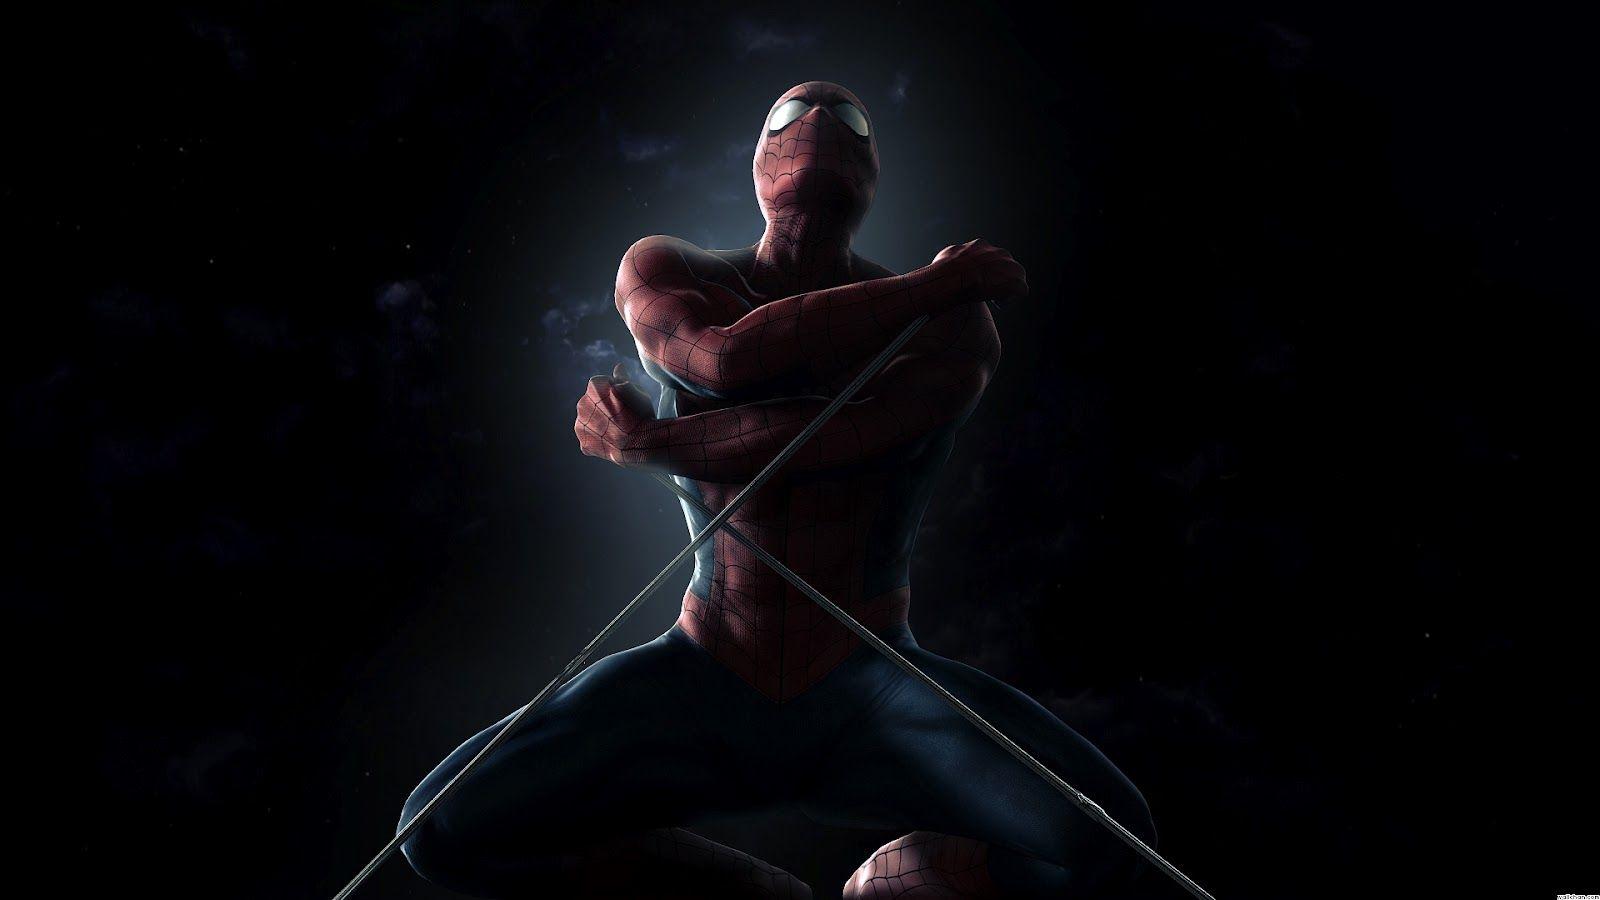 HD WALLPAPER DOWNLOAD: Amazing Spiderman Wallpaper FREE HD WALLPAPER